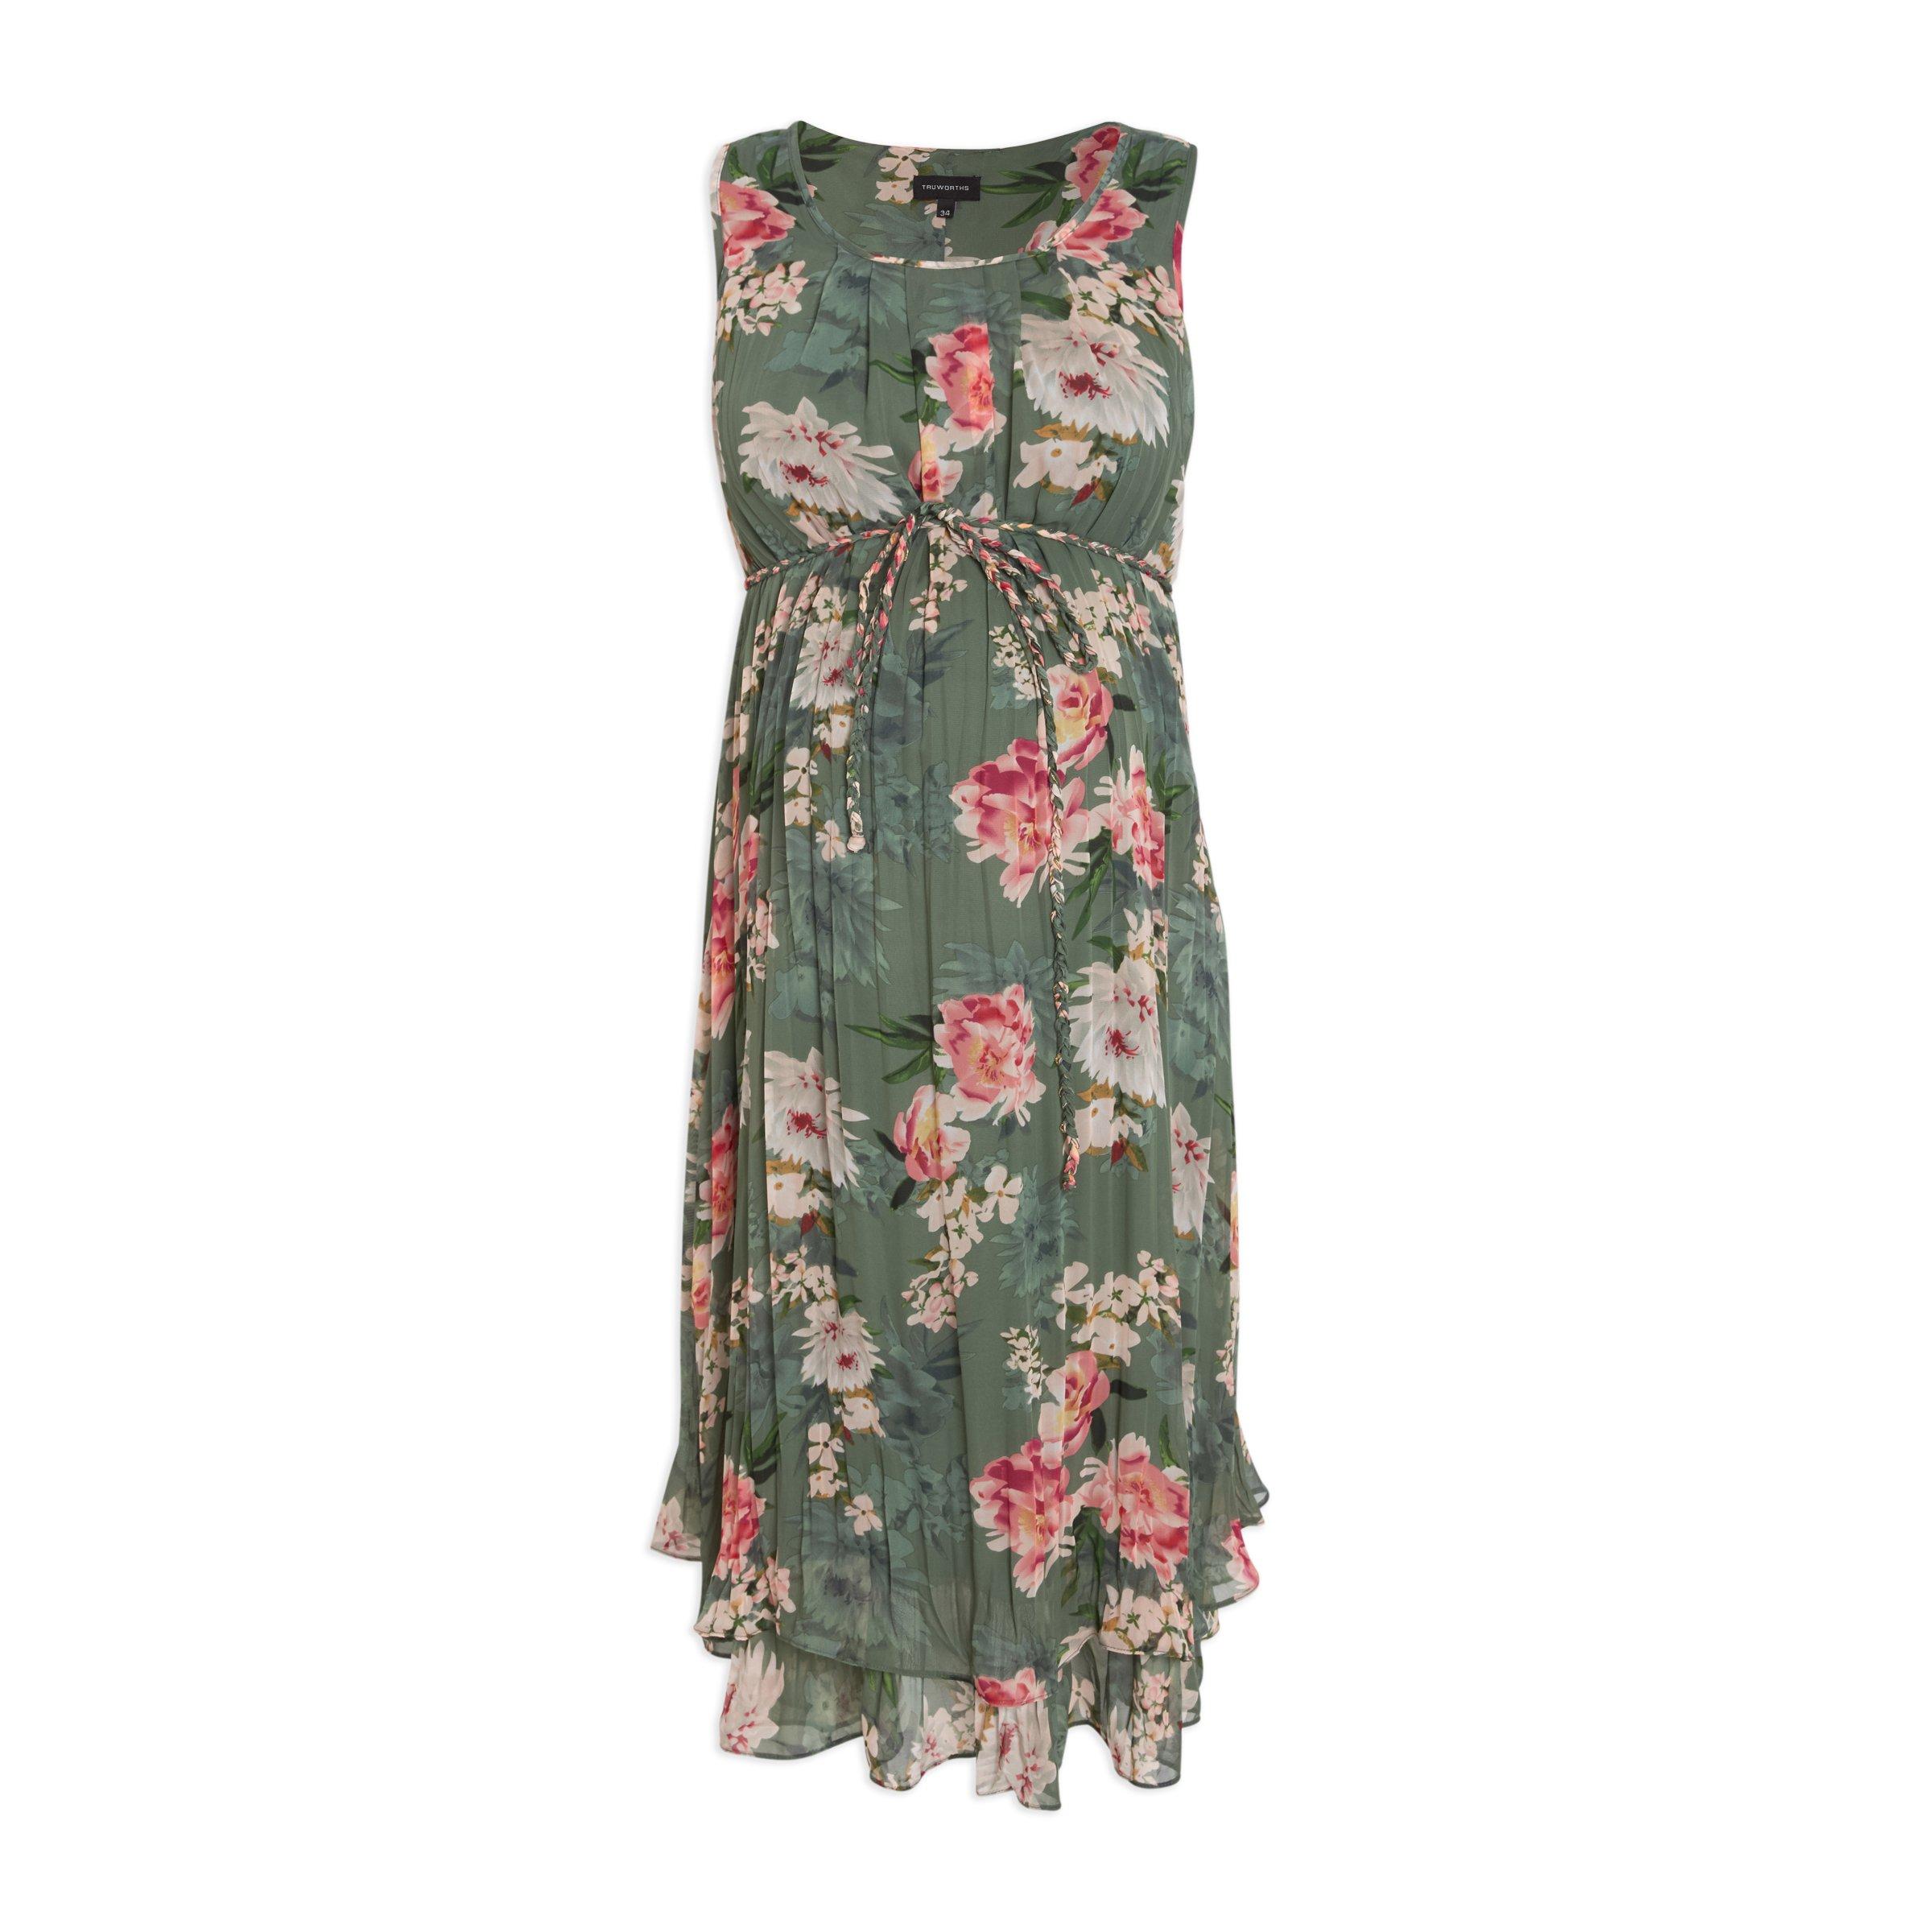 Buy Truworths Floral Printed Dress Online | Truworths